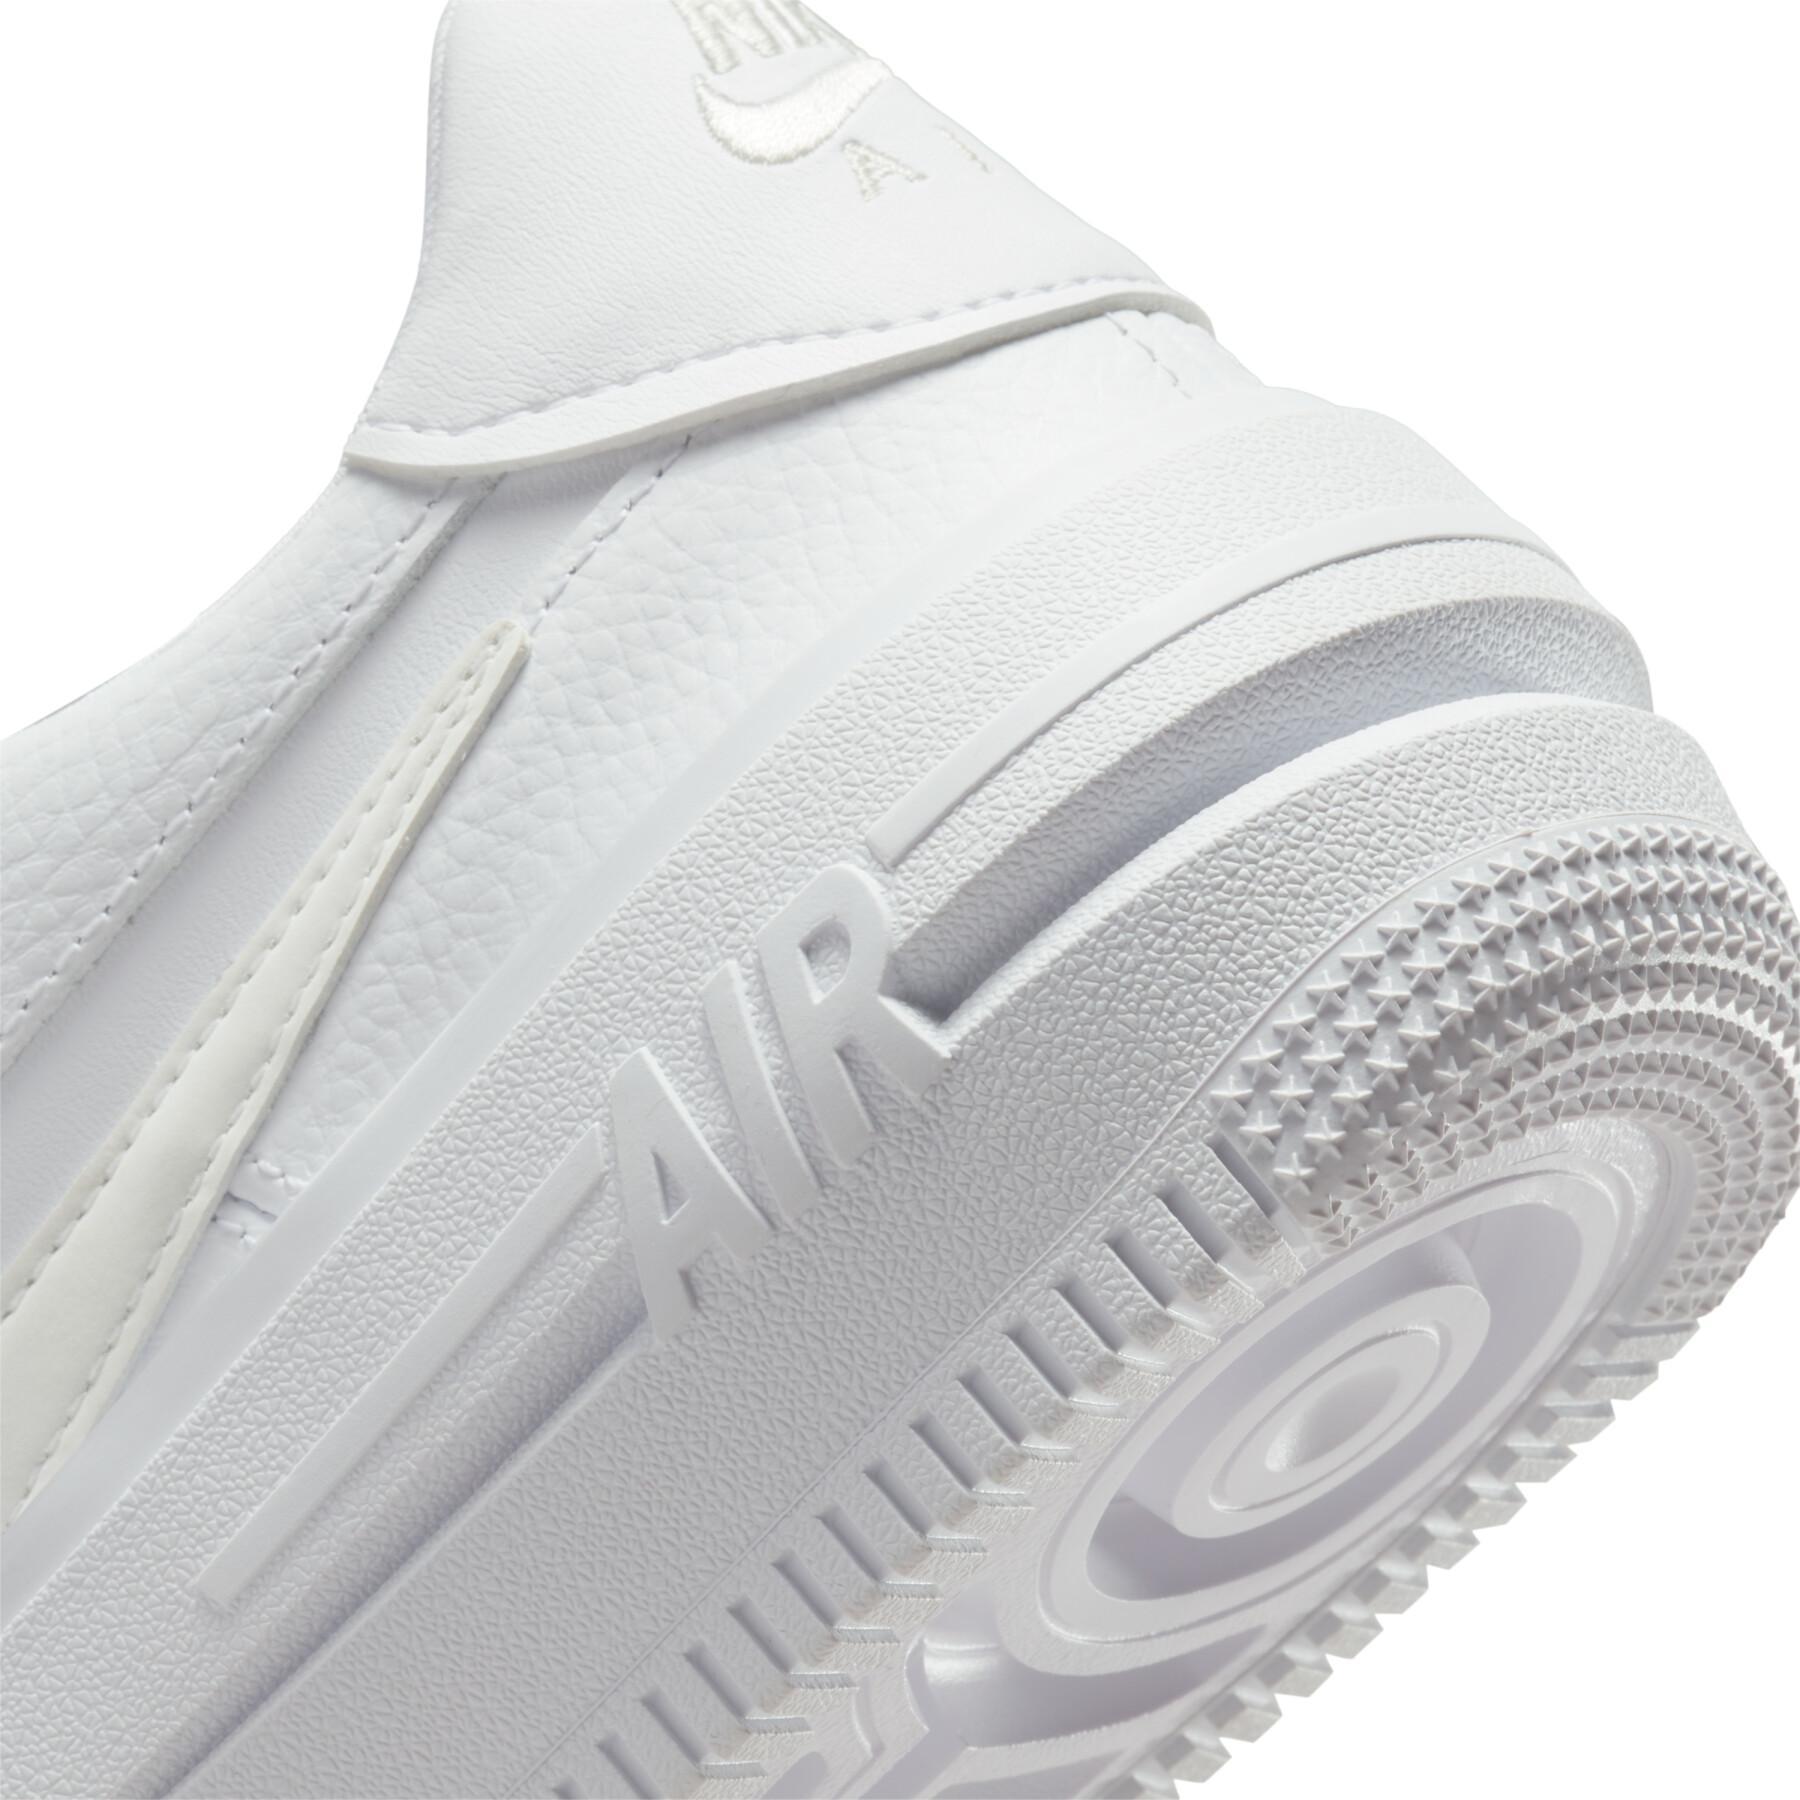 Sneakers für Frauen Nike Air Force 1 Platform